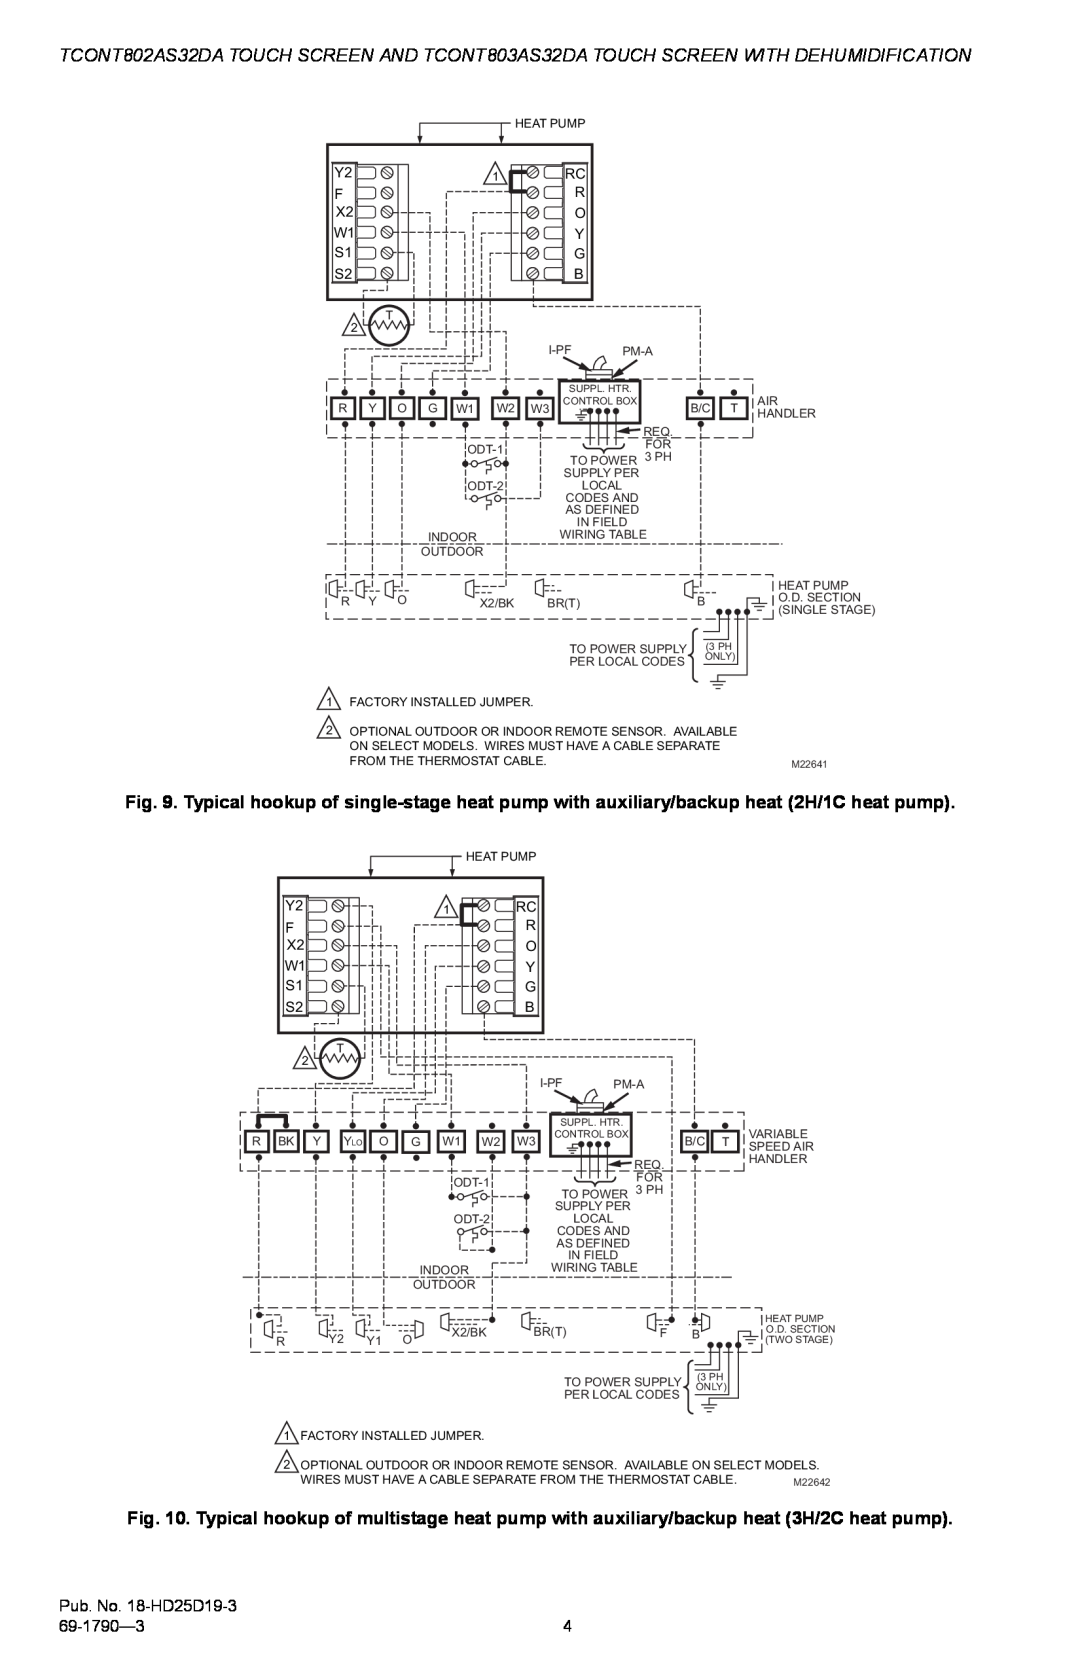 Trane TCONT803AS32DA, TCONT802AS32DA installation instructions Pub. No. 18-HD25D19-3, 69-1790-3 